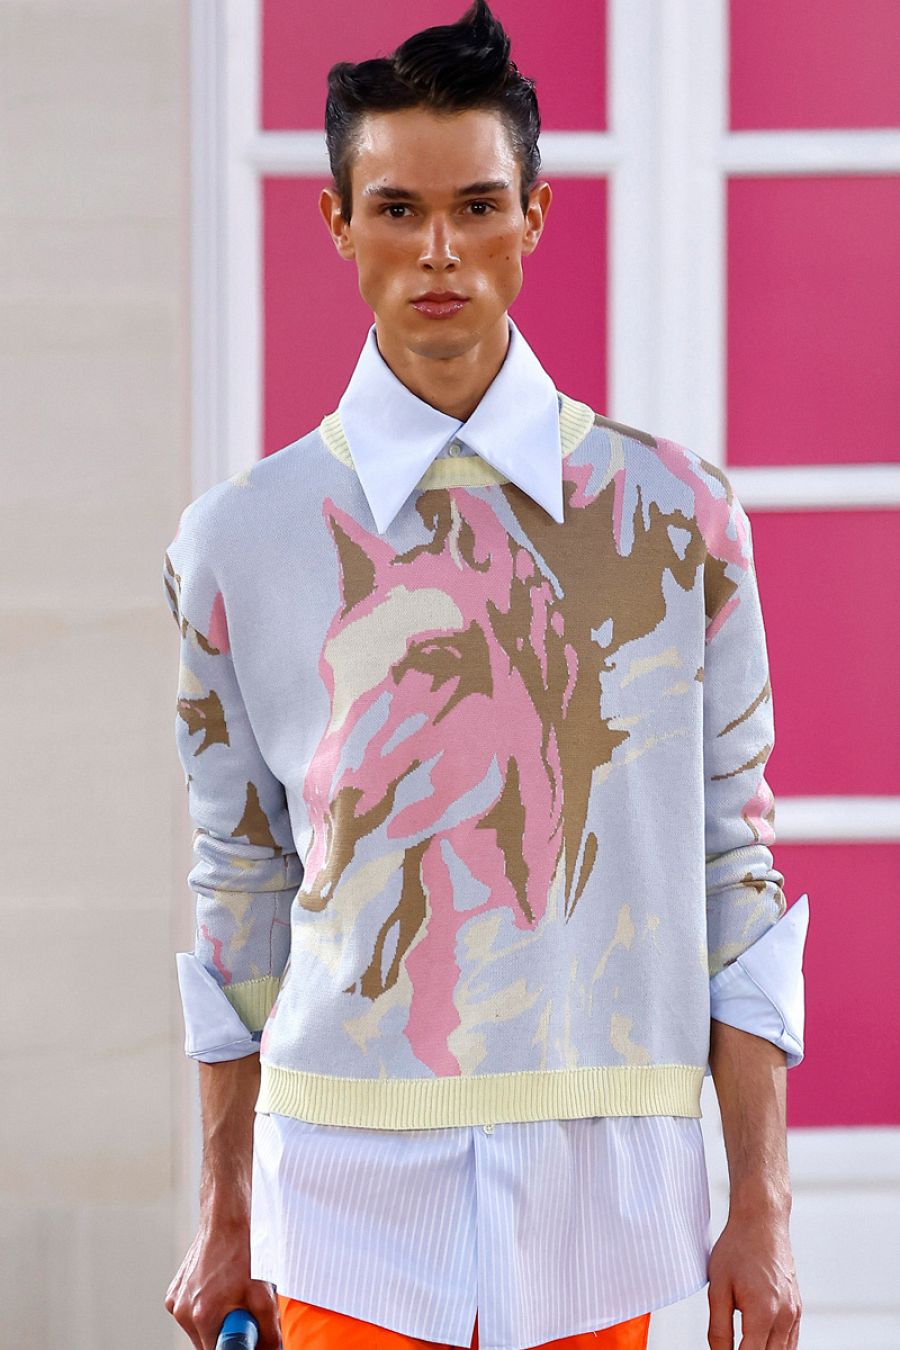 Louis Vuitton Paris moda masculina Primavera Verano modelo camisa